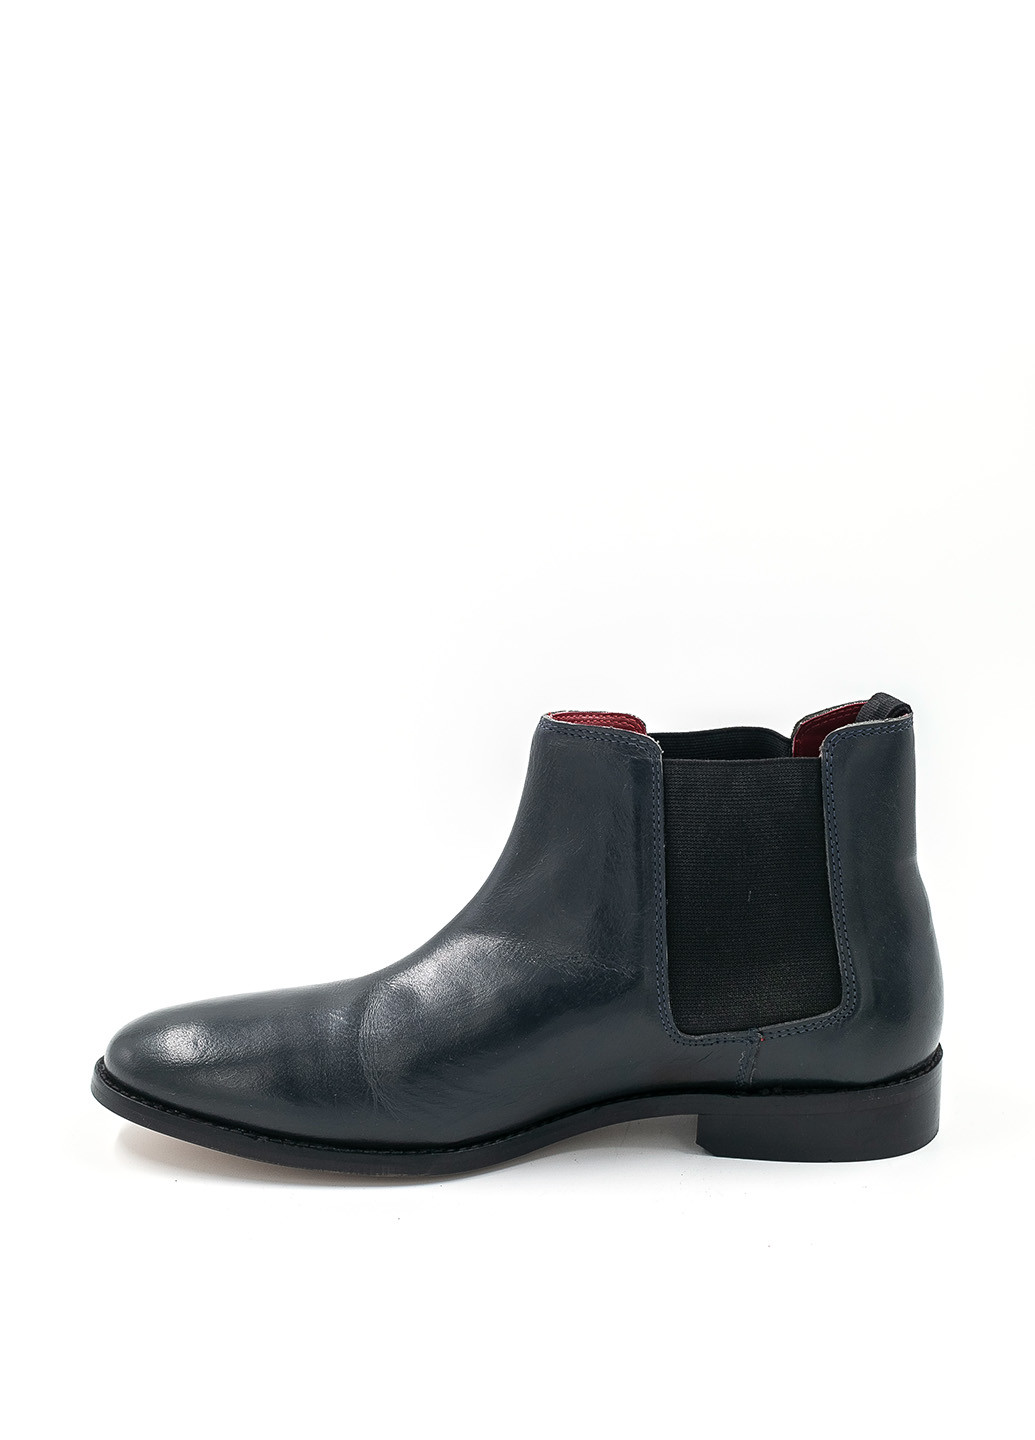 Темно-серые осенние ботинки челси Christian Laurier